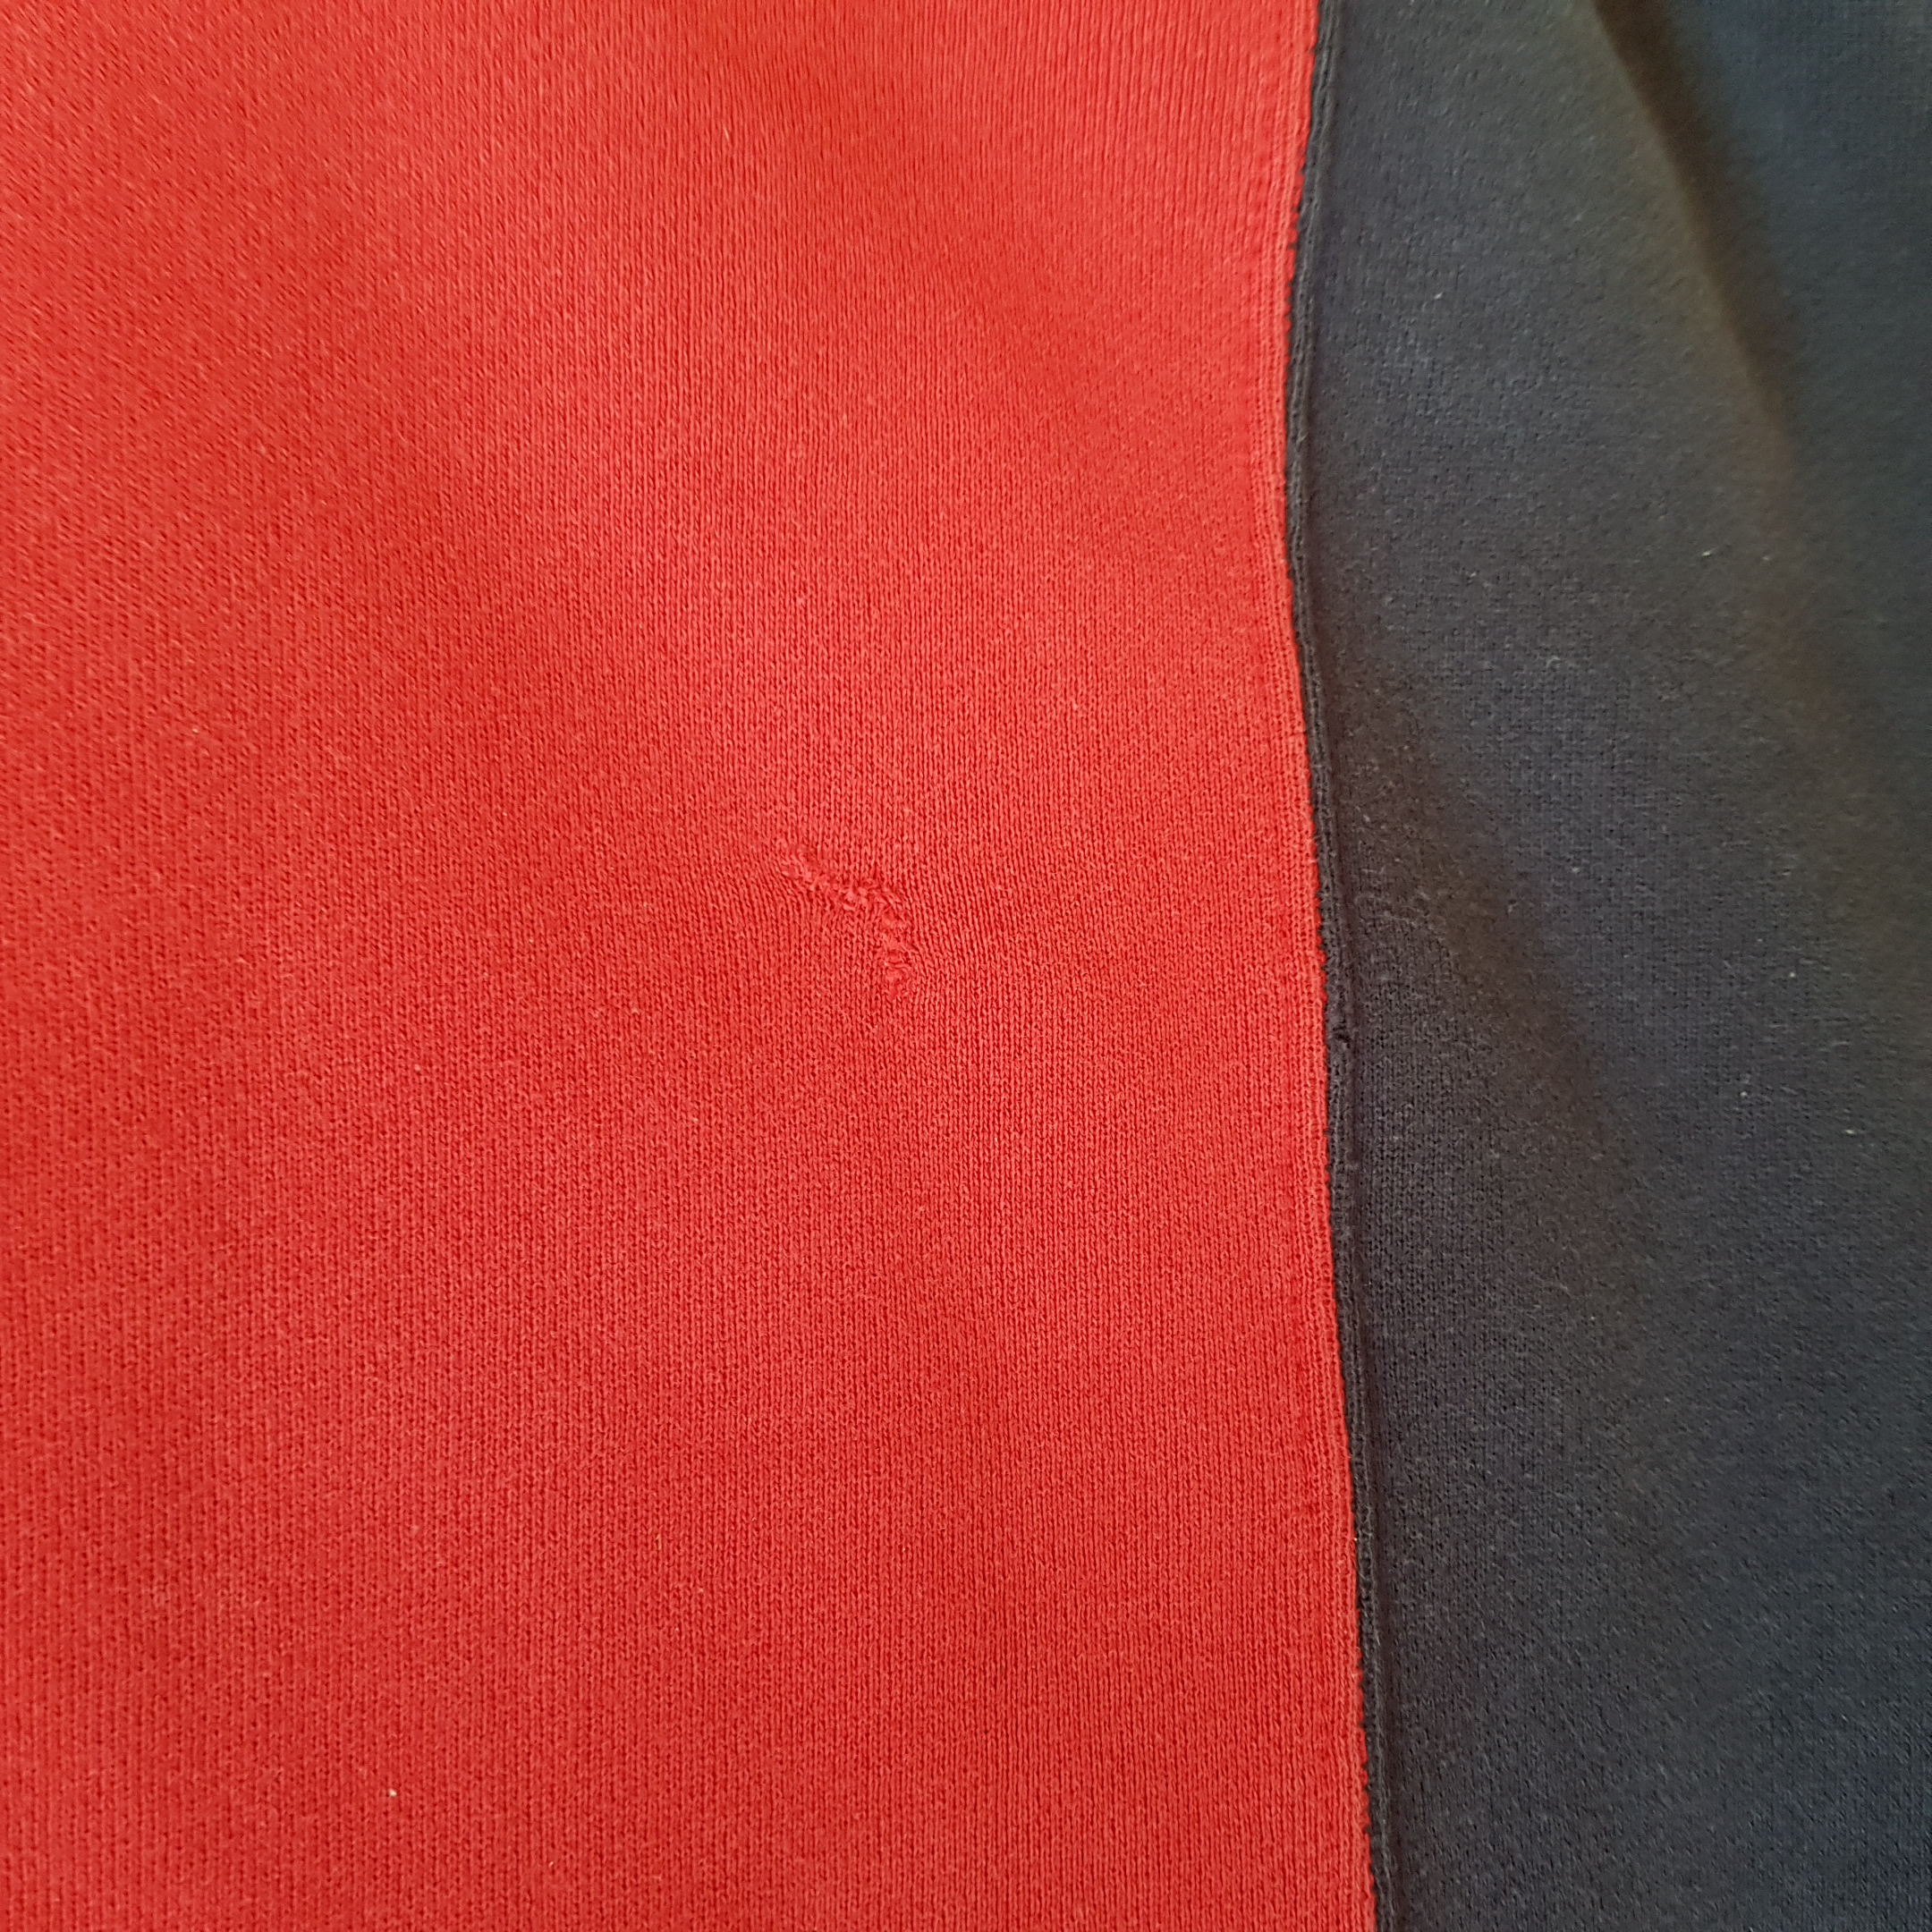 Polo Sport Tricolour Quarter Zip Jumper - Retro Robes